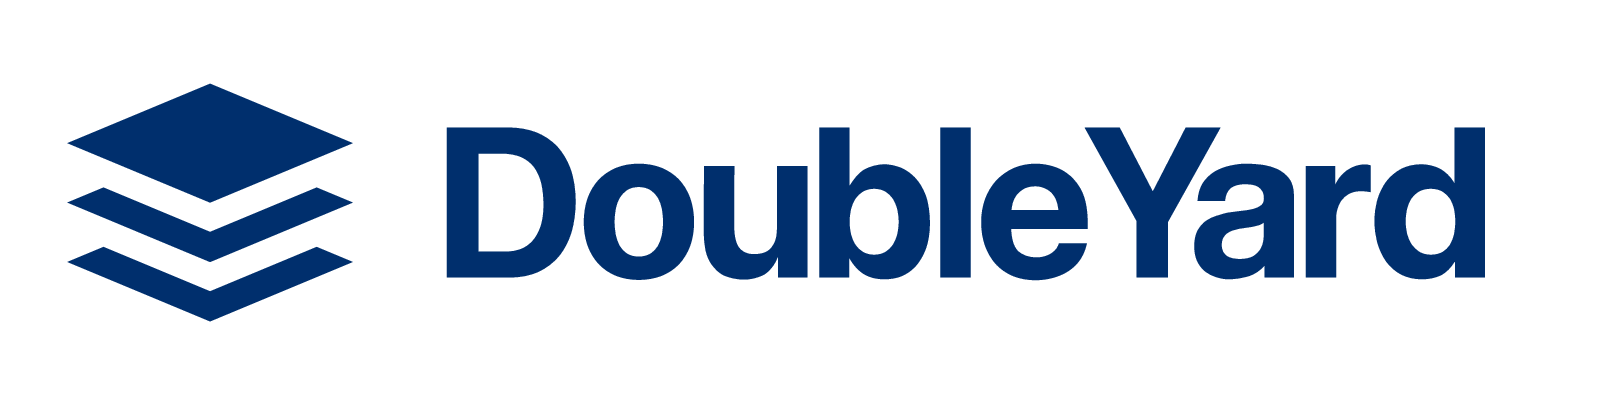 Double Yard corporate logo